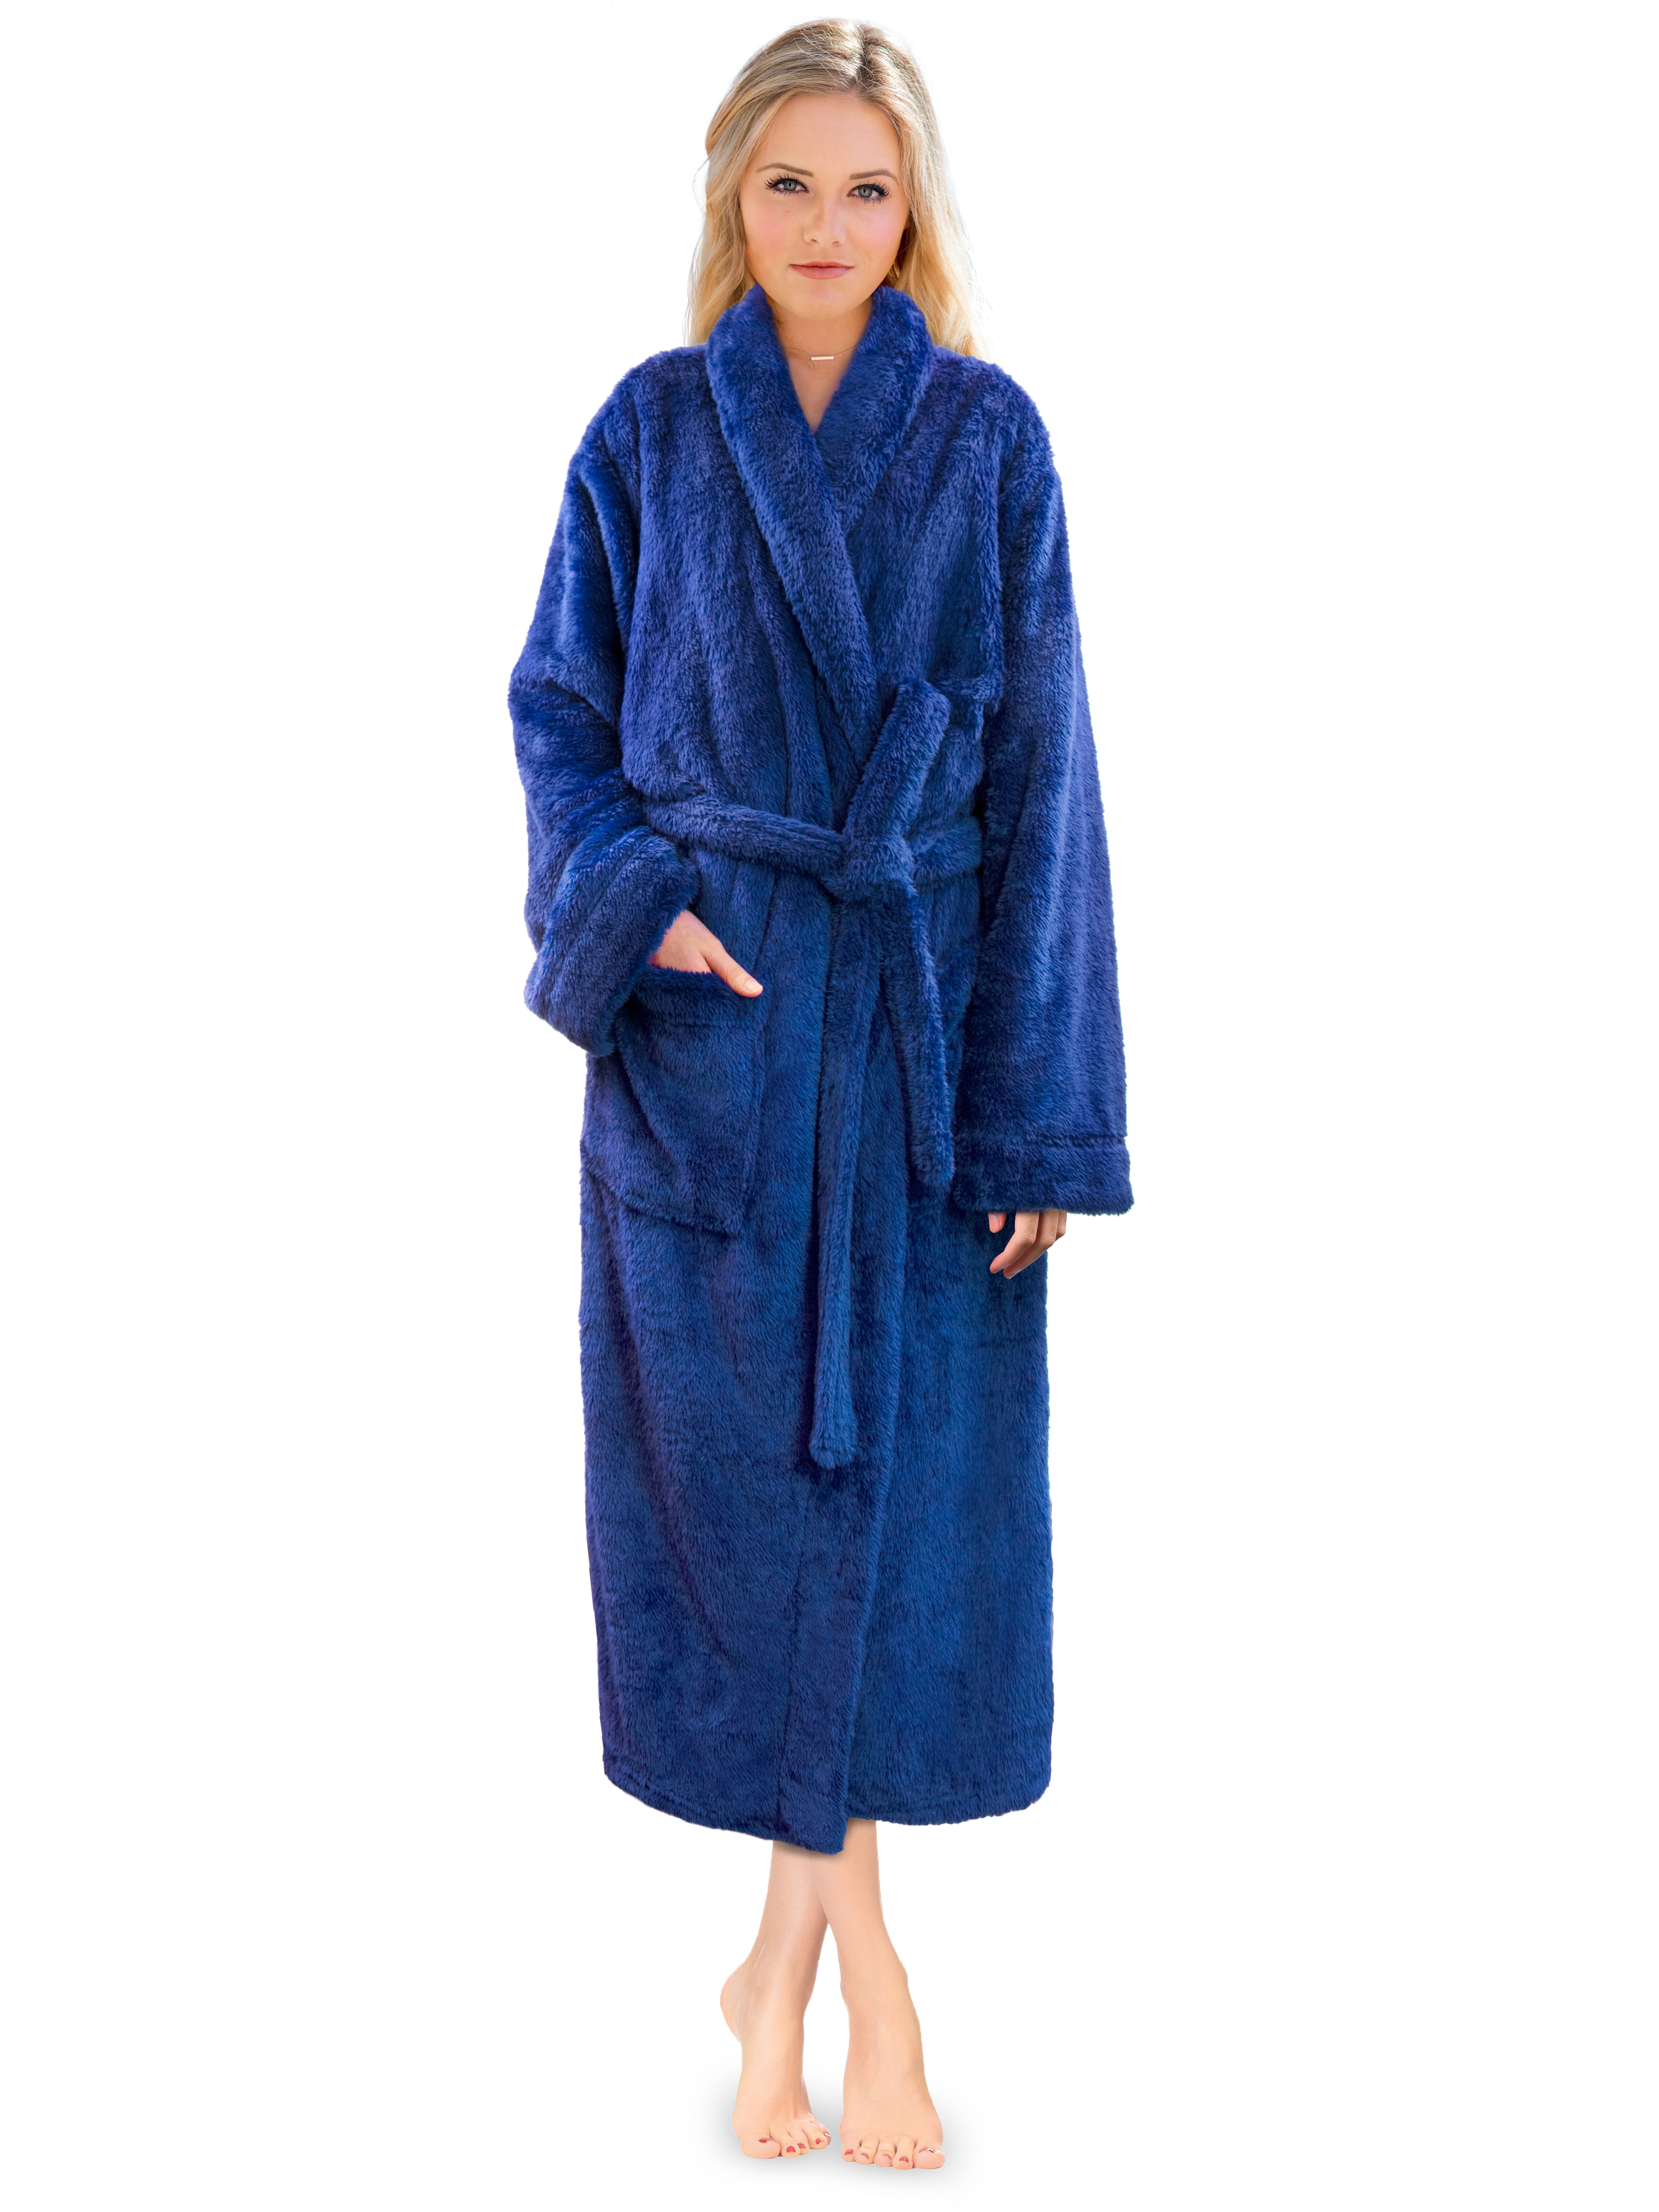  Dreamlascar Plush Robes for Women Fuzzy Wrap Bathrobe